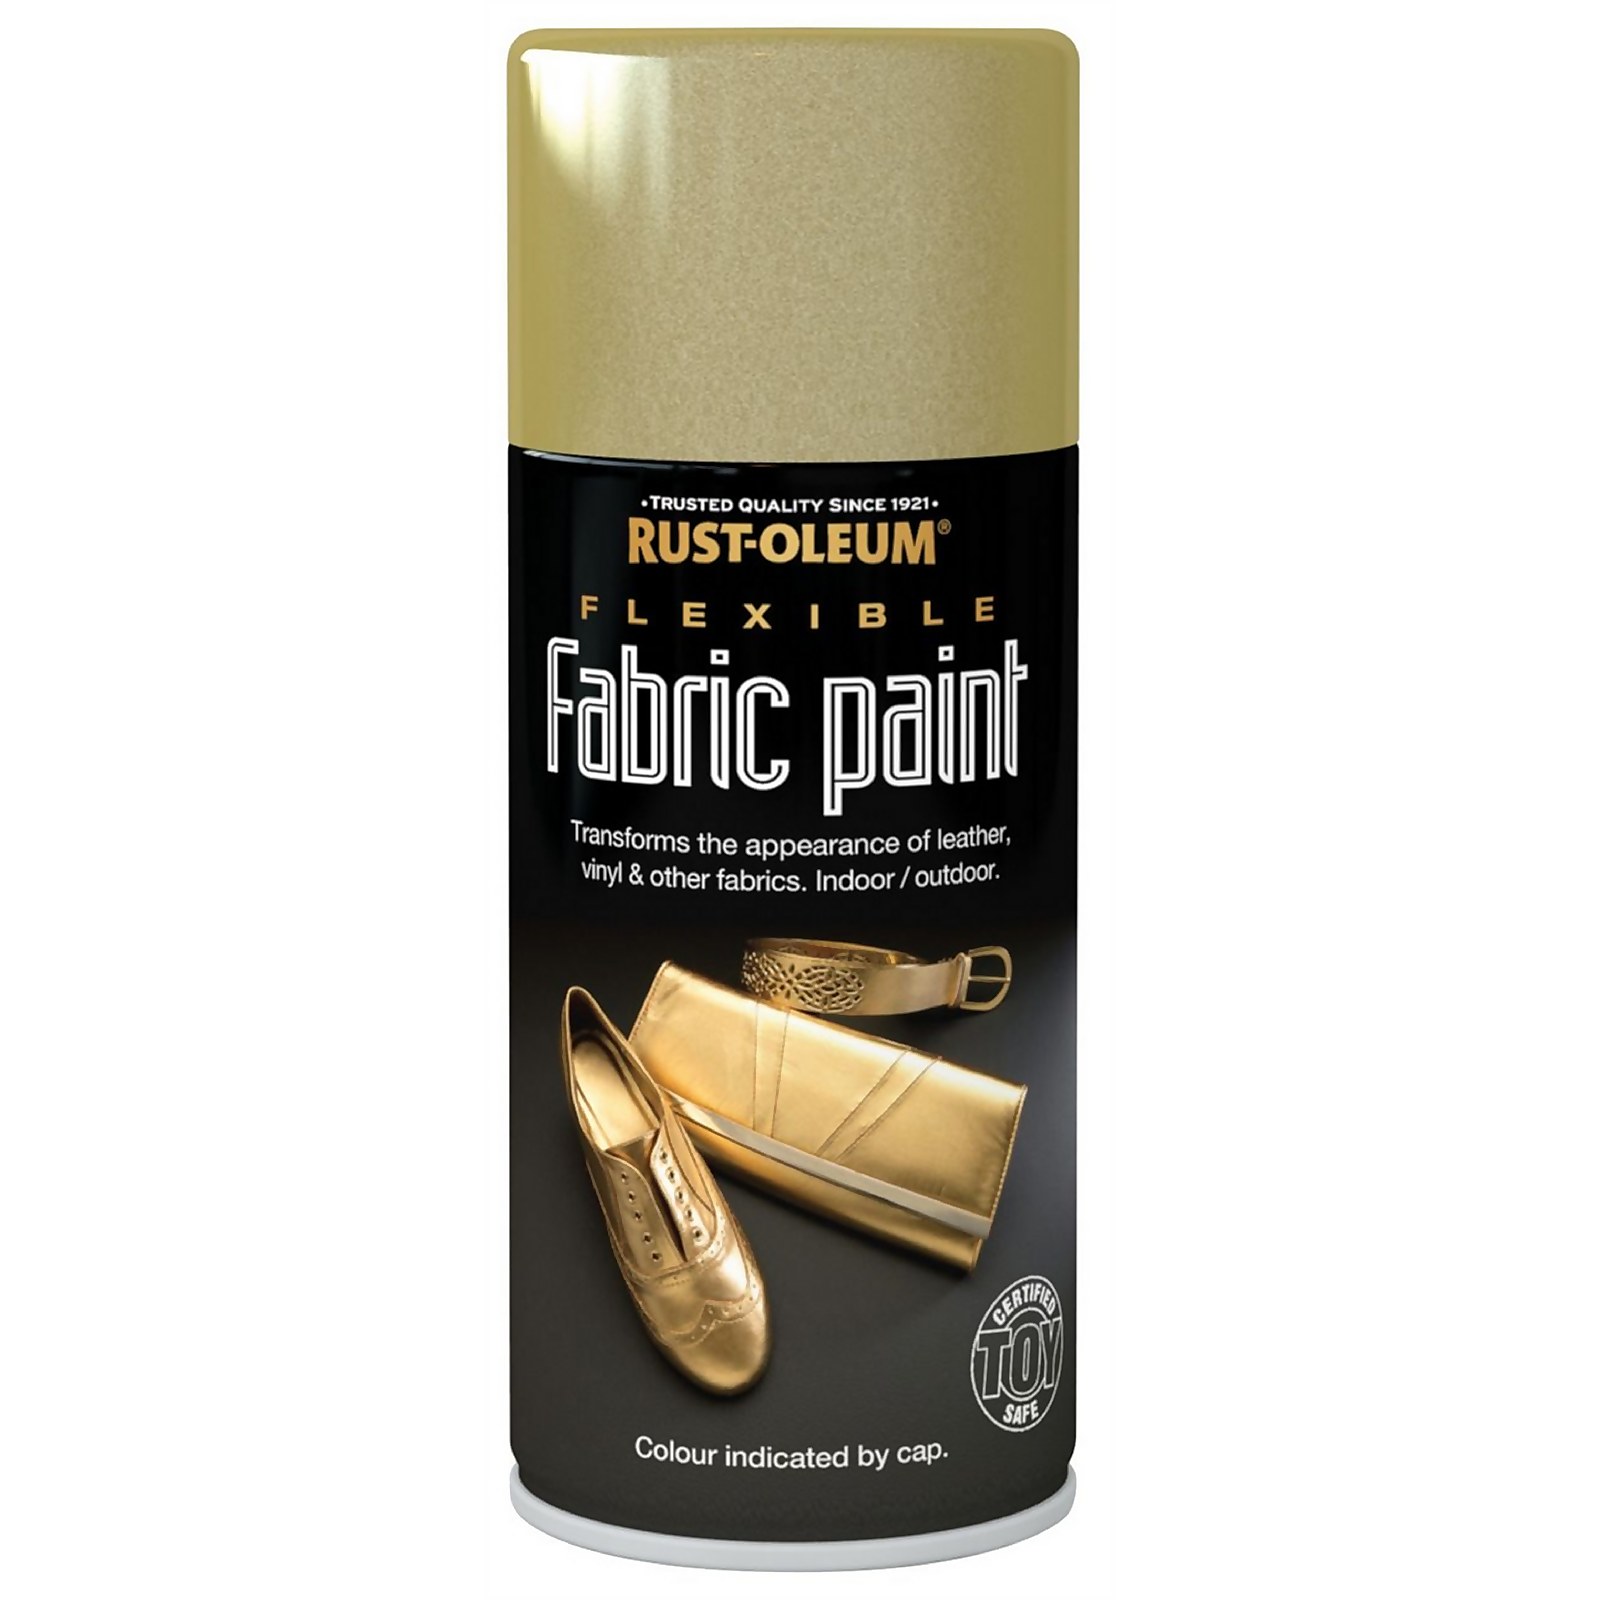 Photo of Rust-oleum - Flexible Fabric Paint Gold - Spray - 150ml